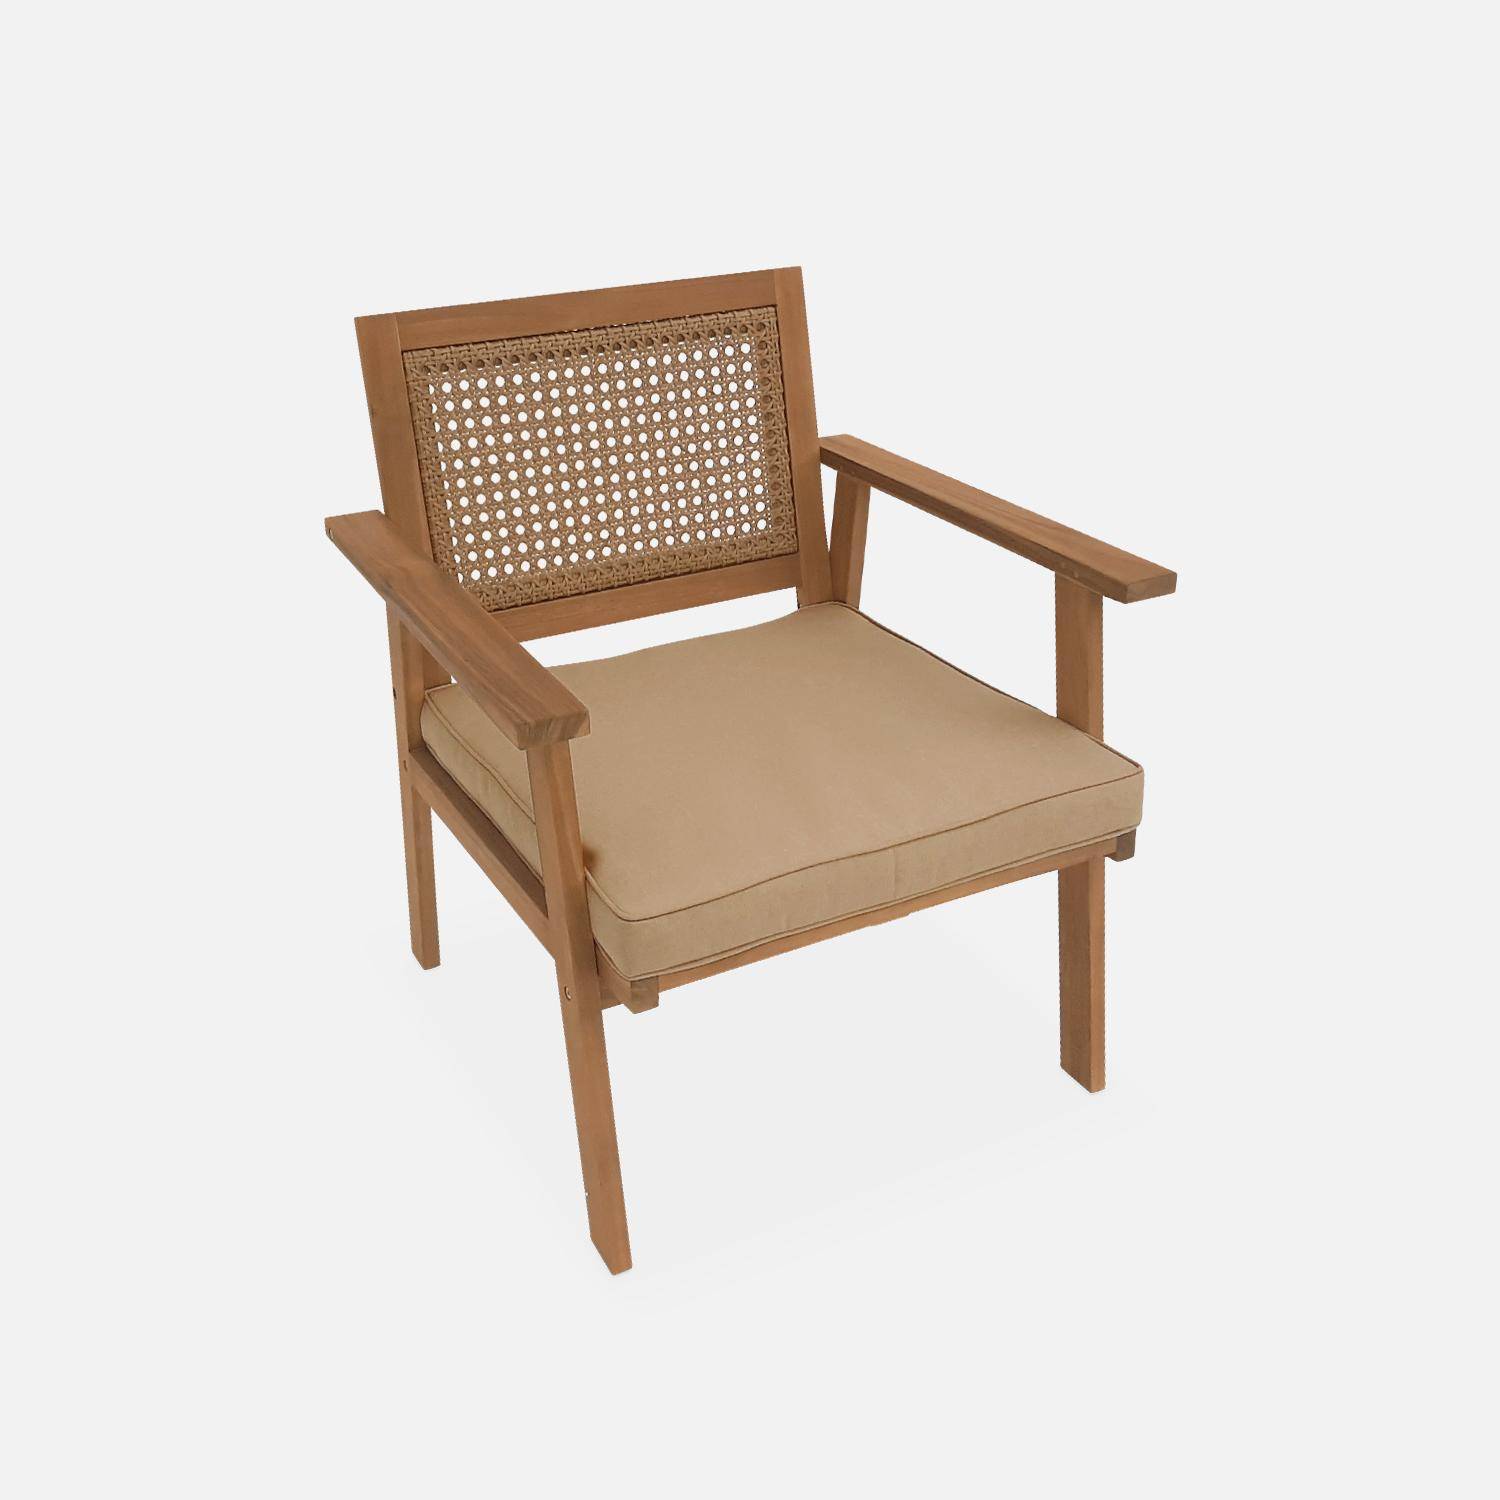 4-seater wood and cane rattan garden sofa set, Teak colour,sweeek,Photo6